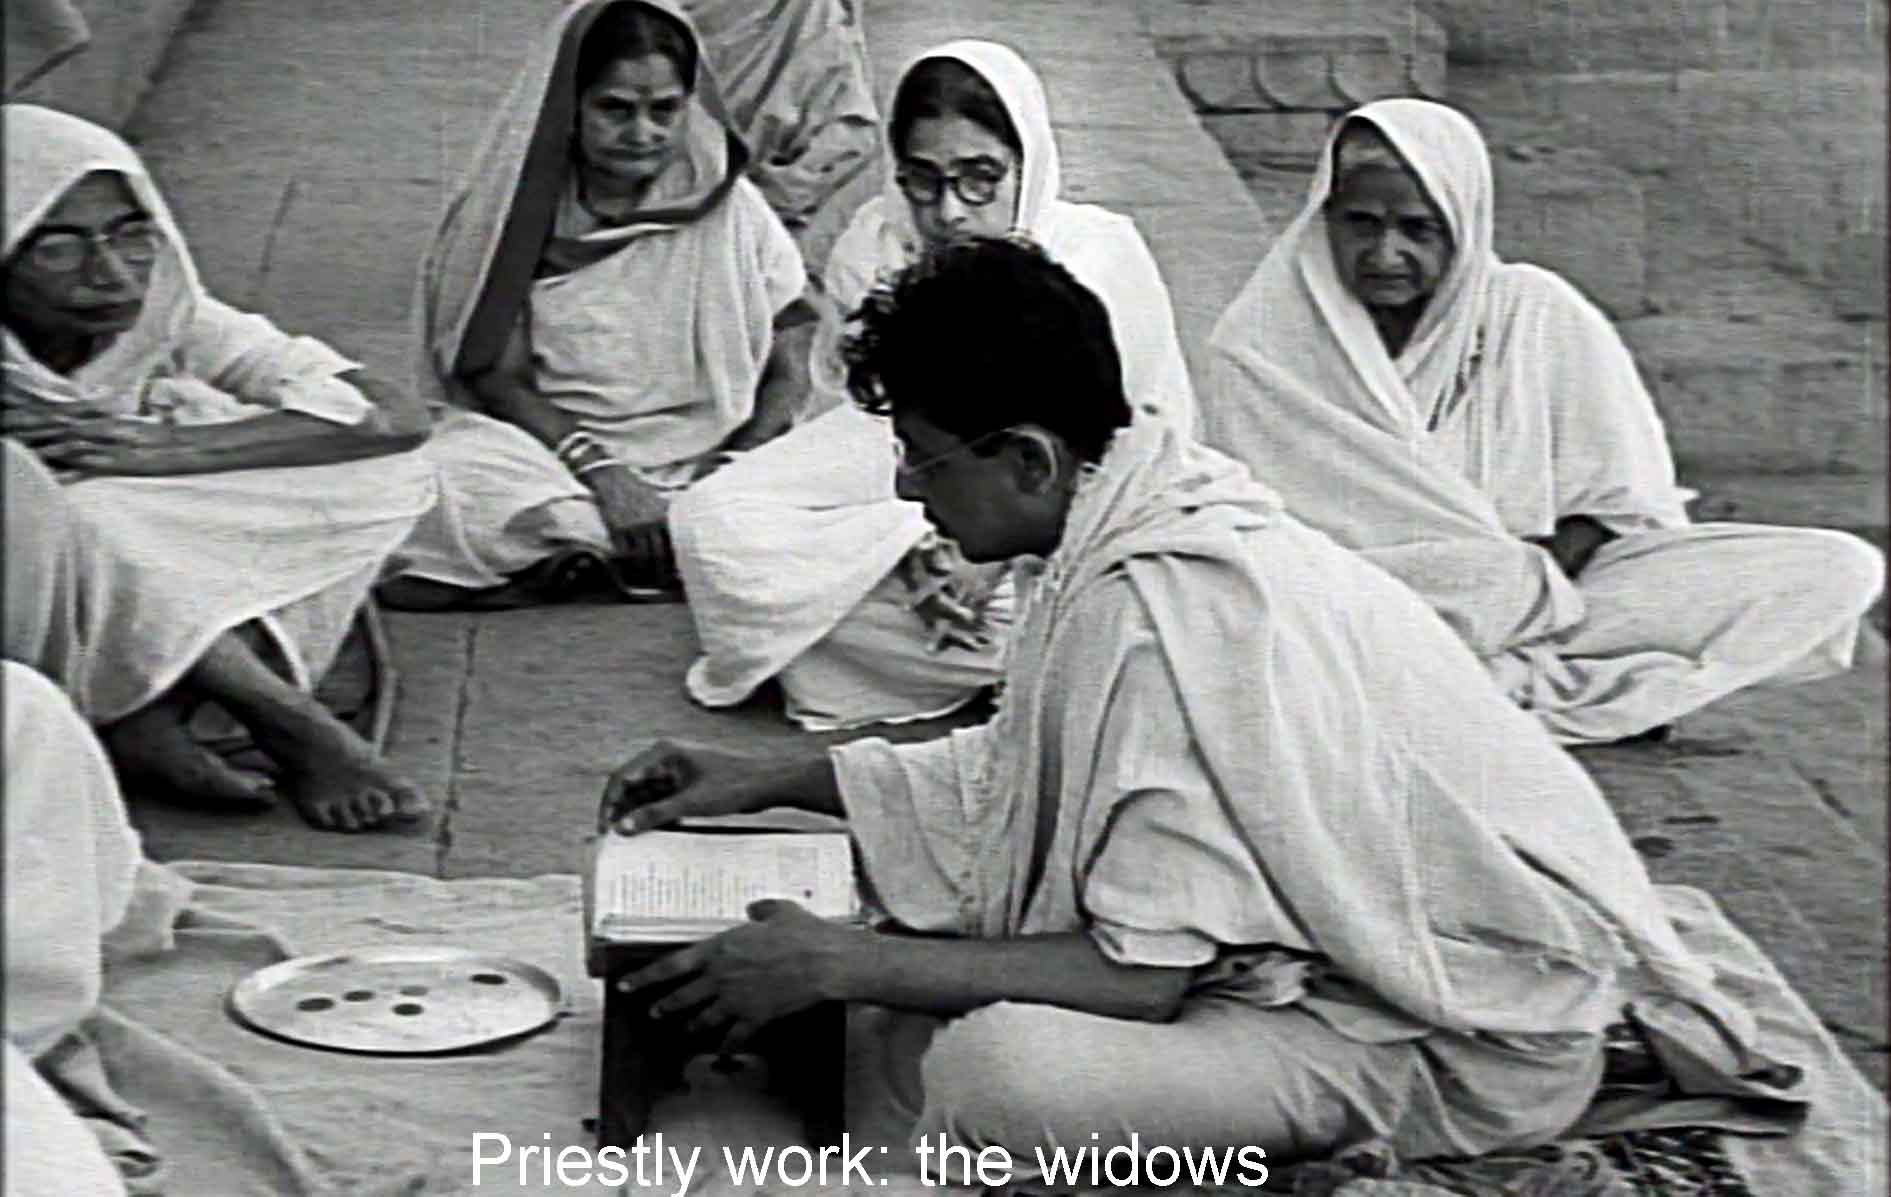 Priestly work-- the widows